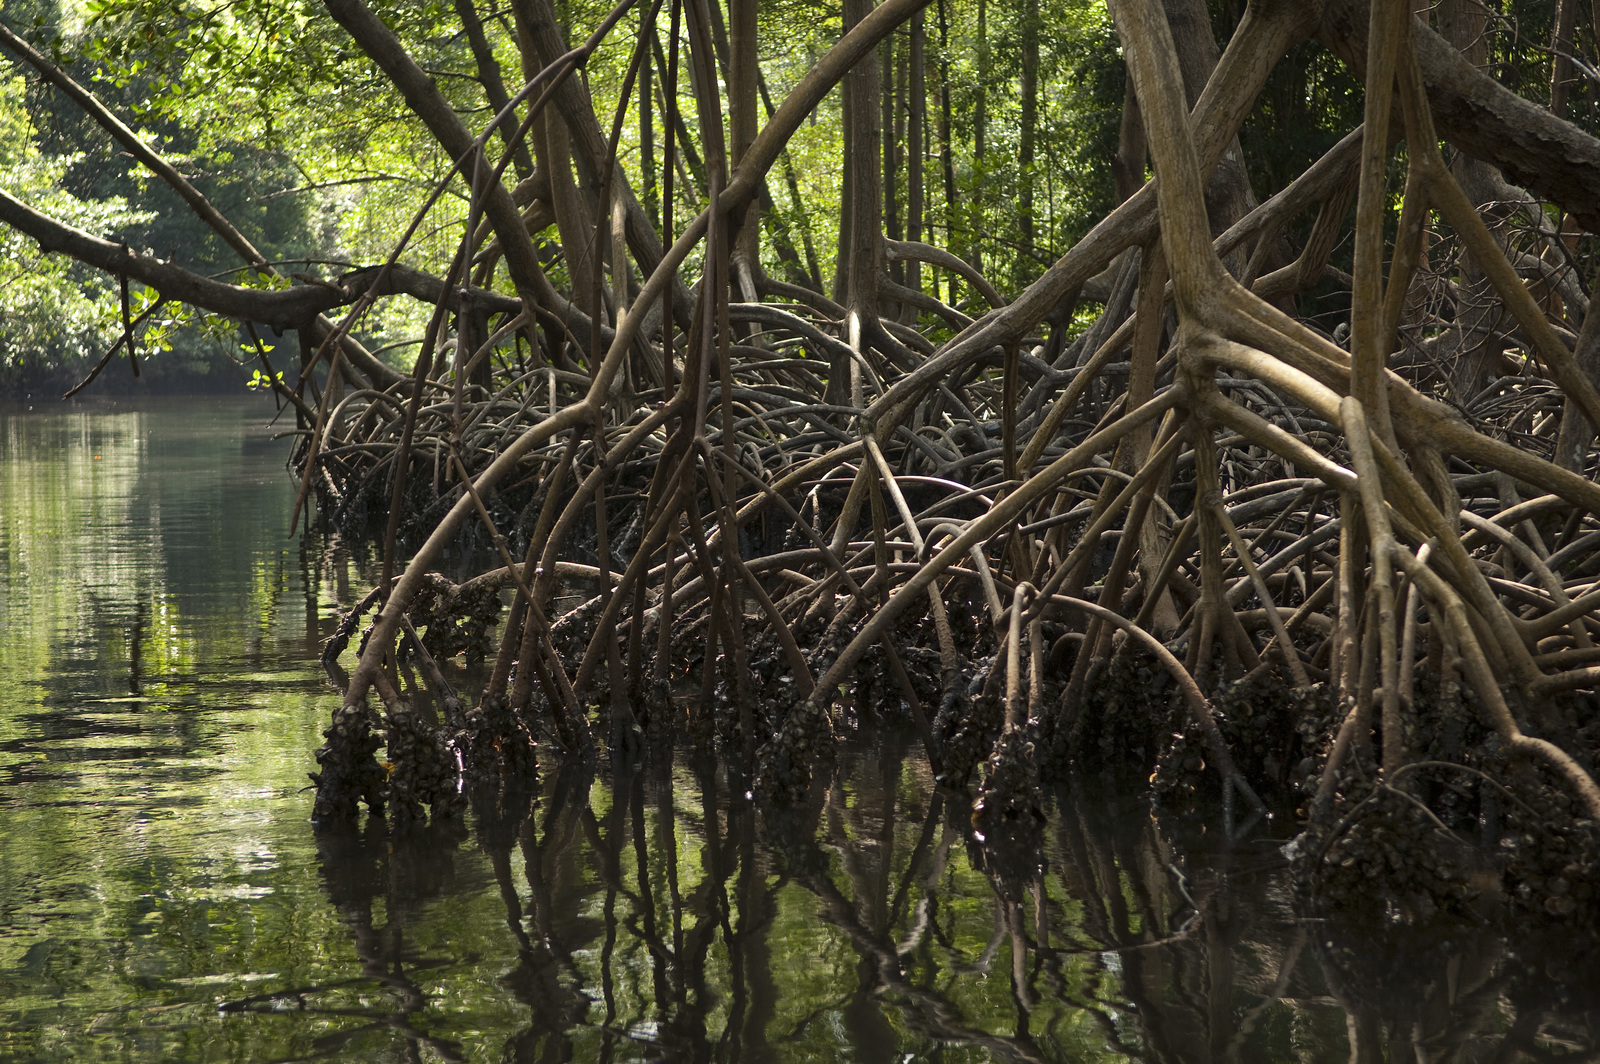 The Global Value of Mangroves for Risk Reduction